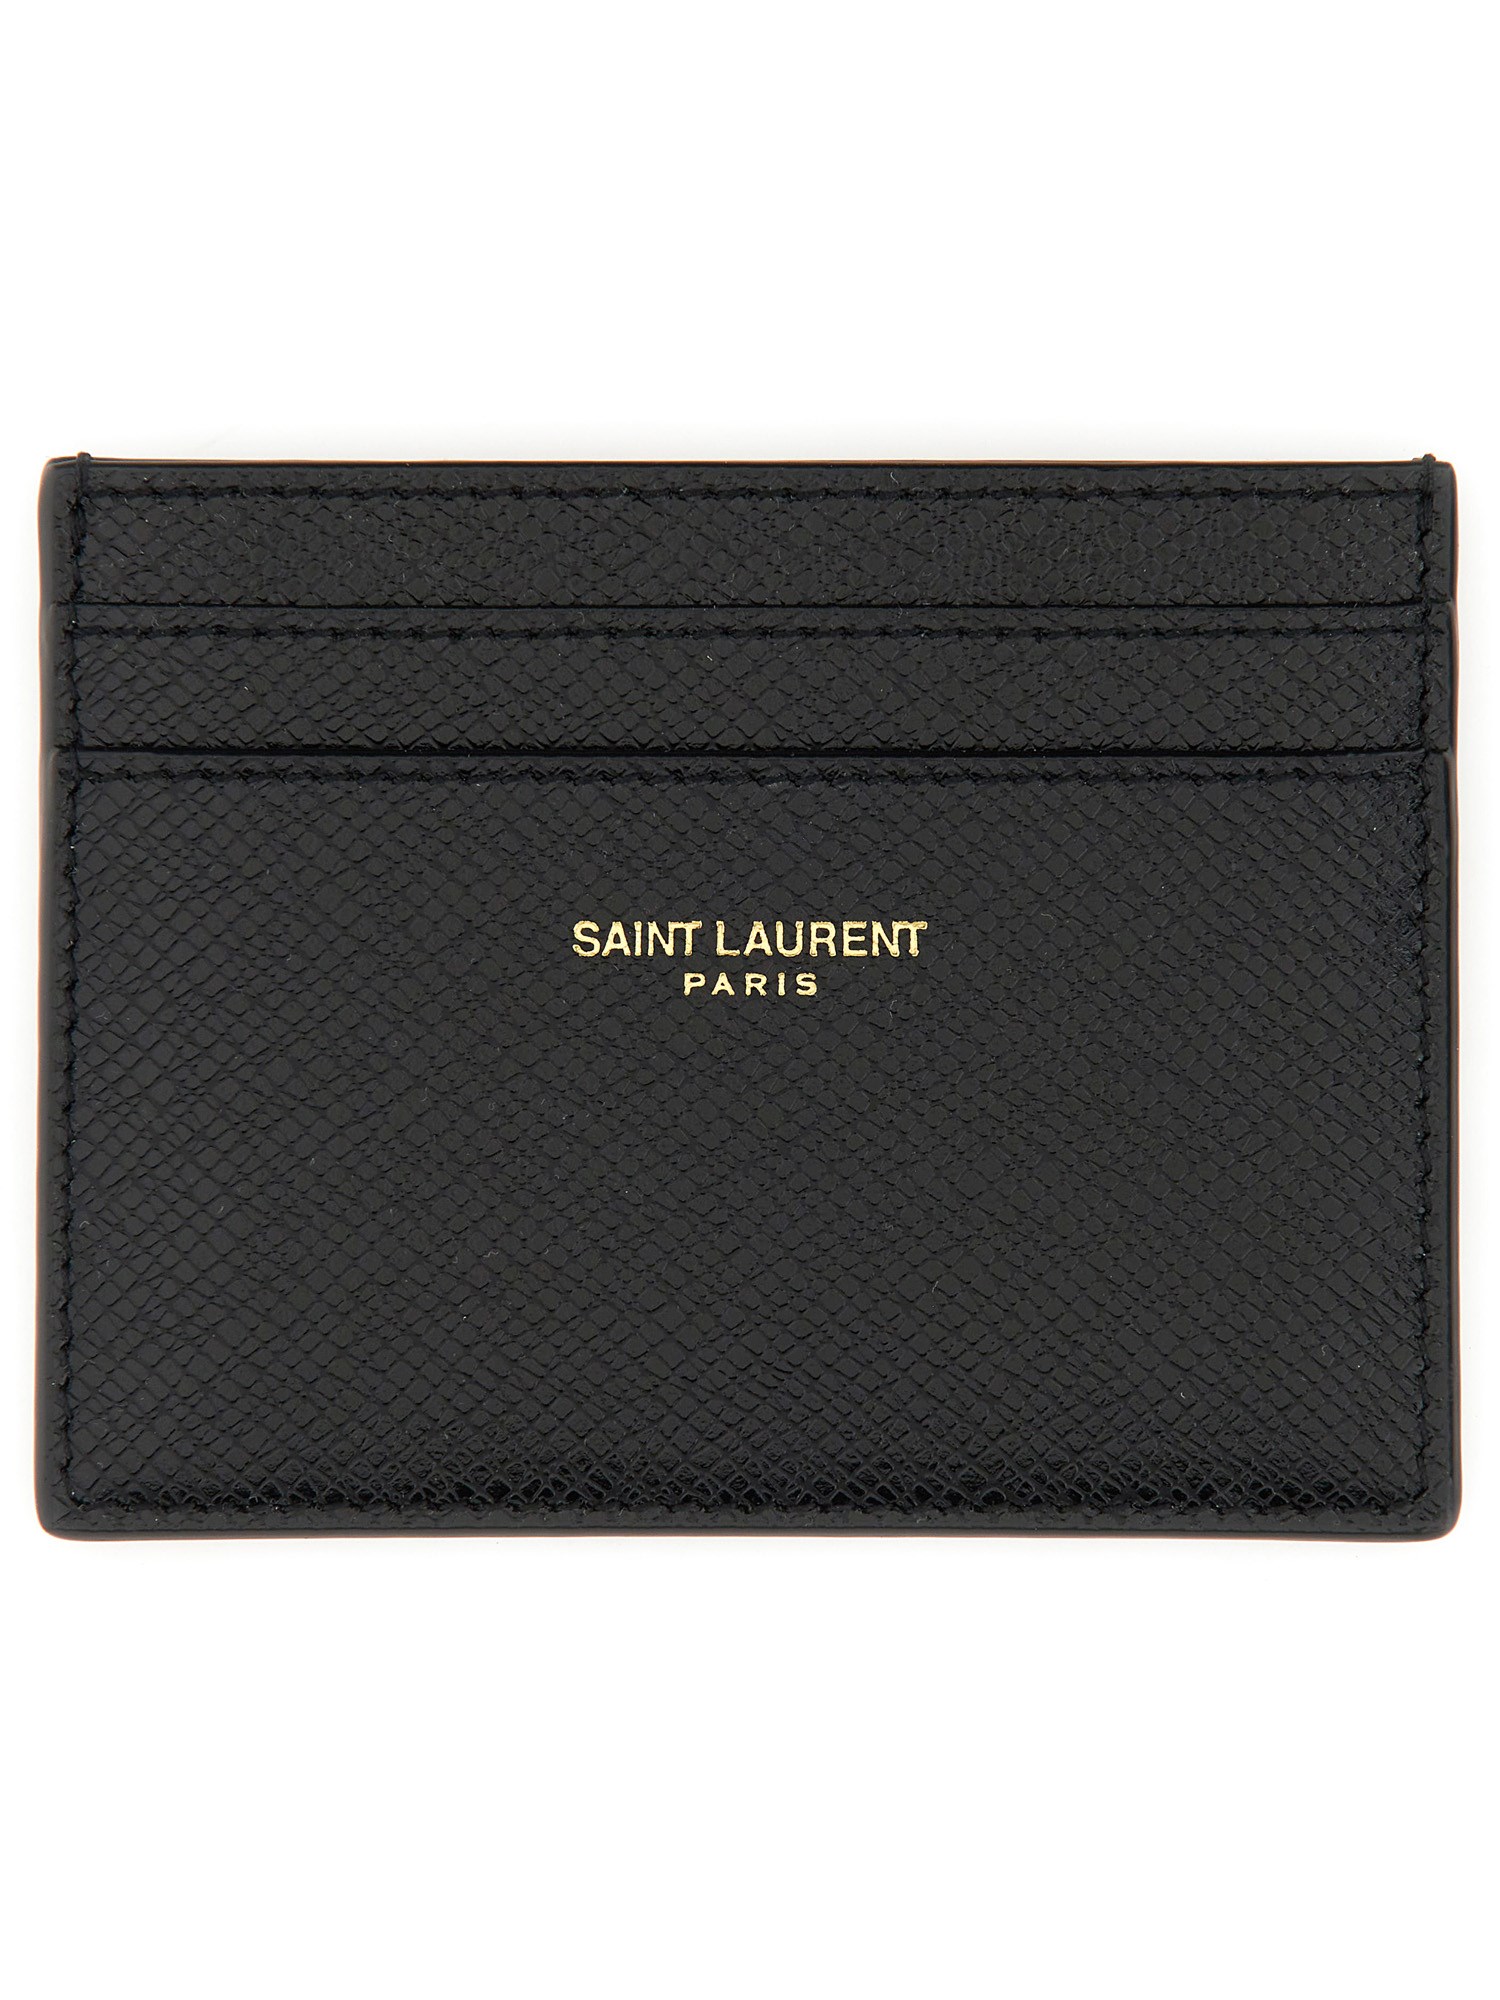 saint laurent card holder with logo